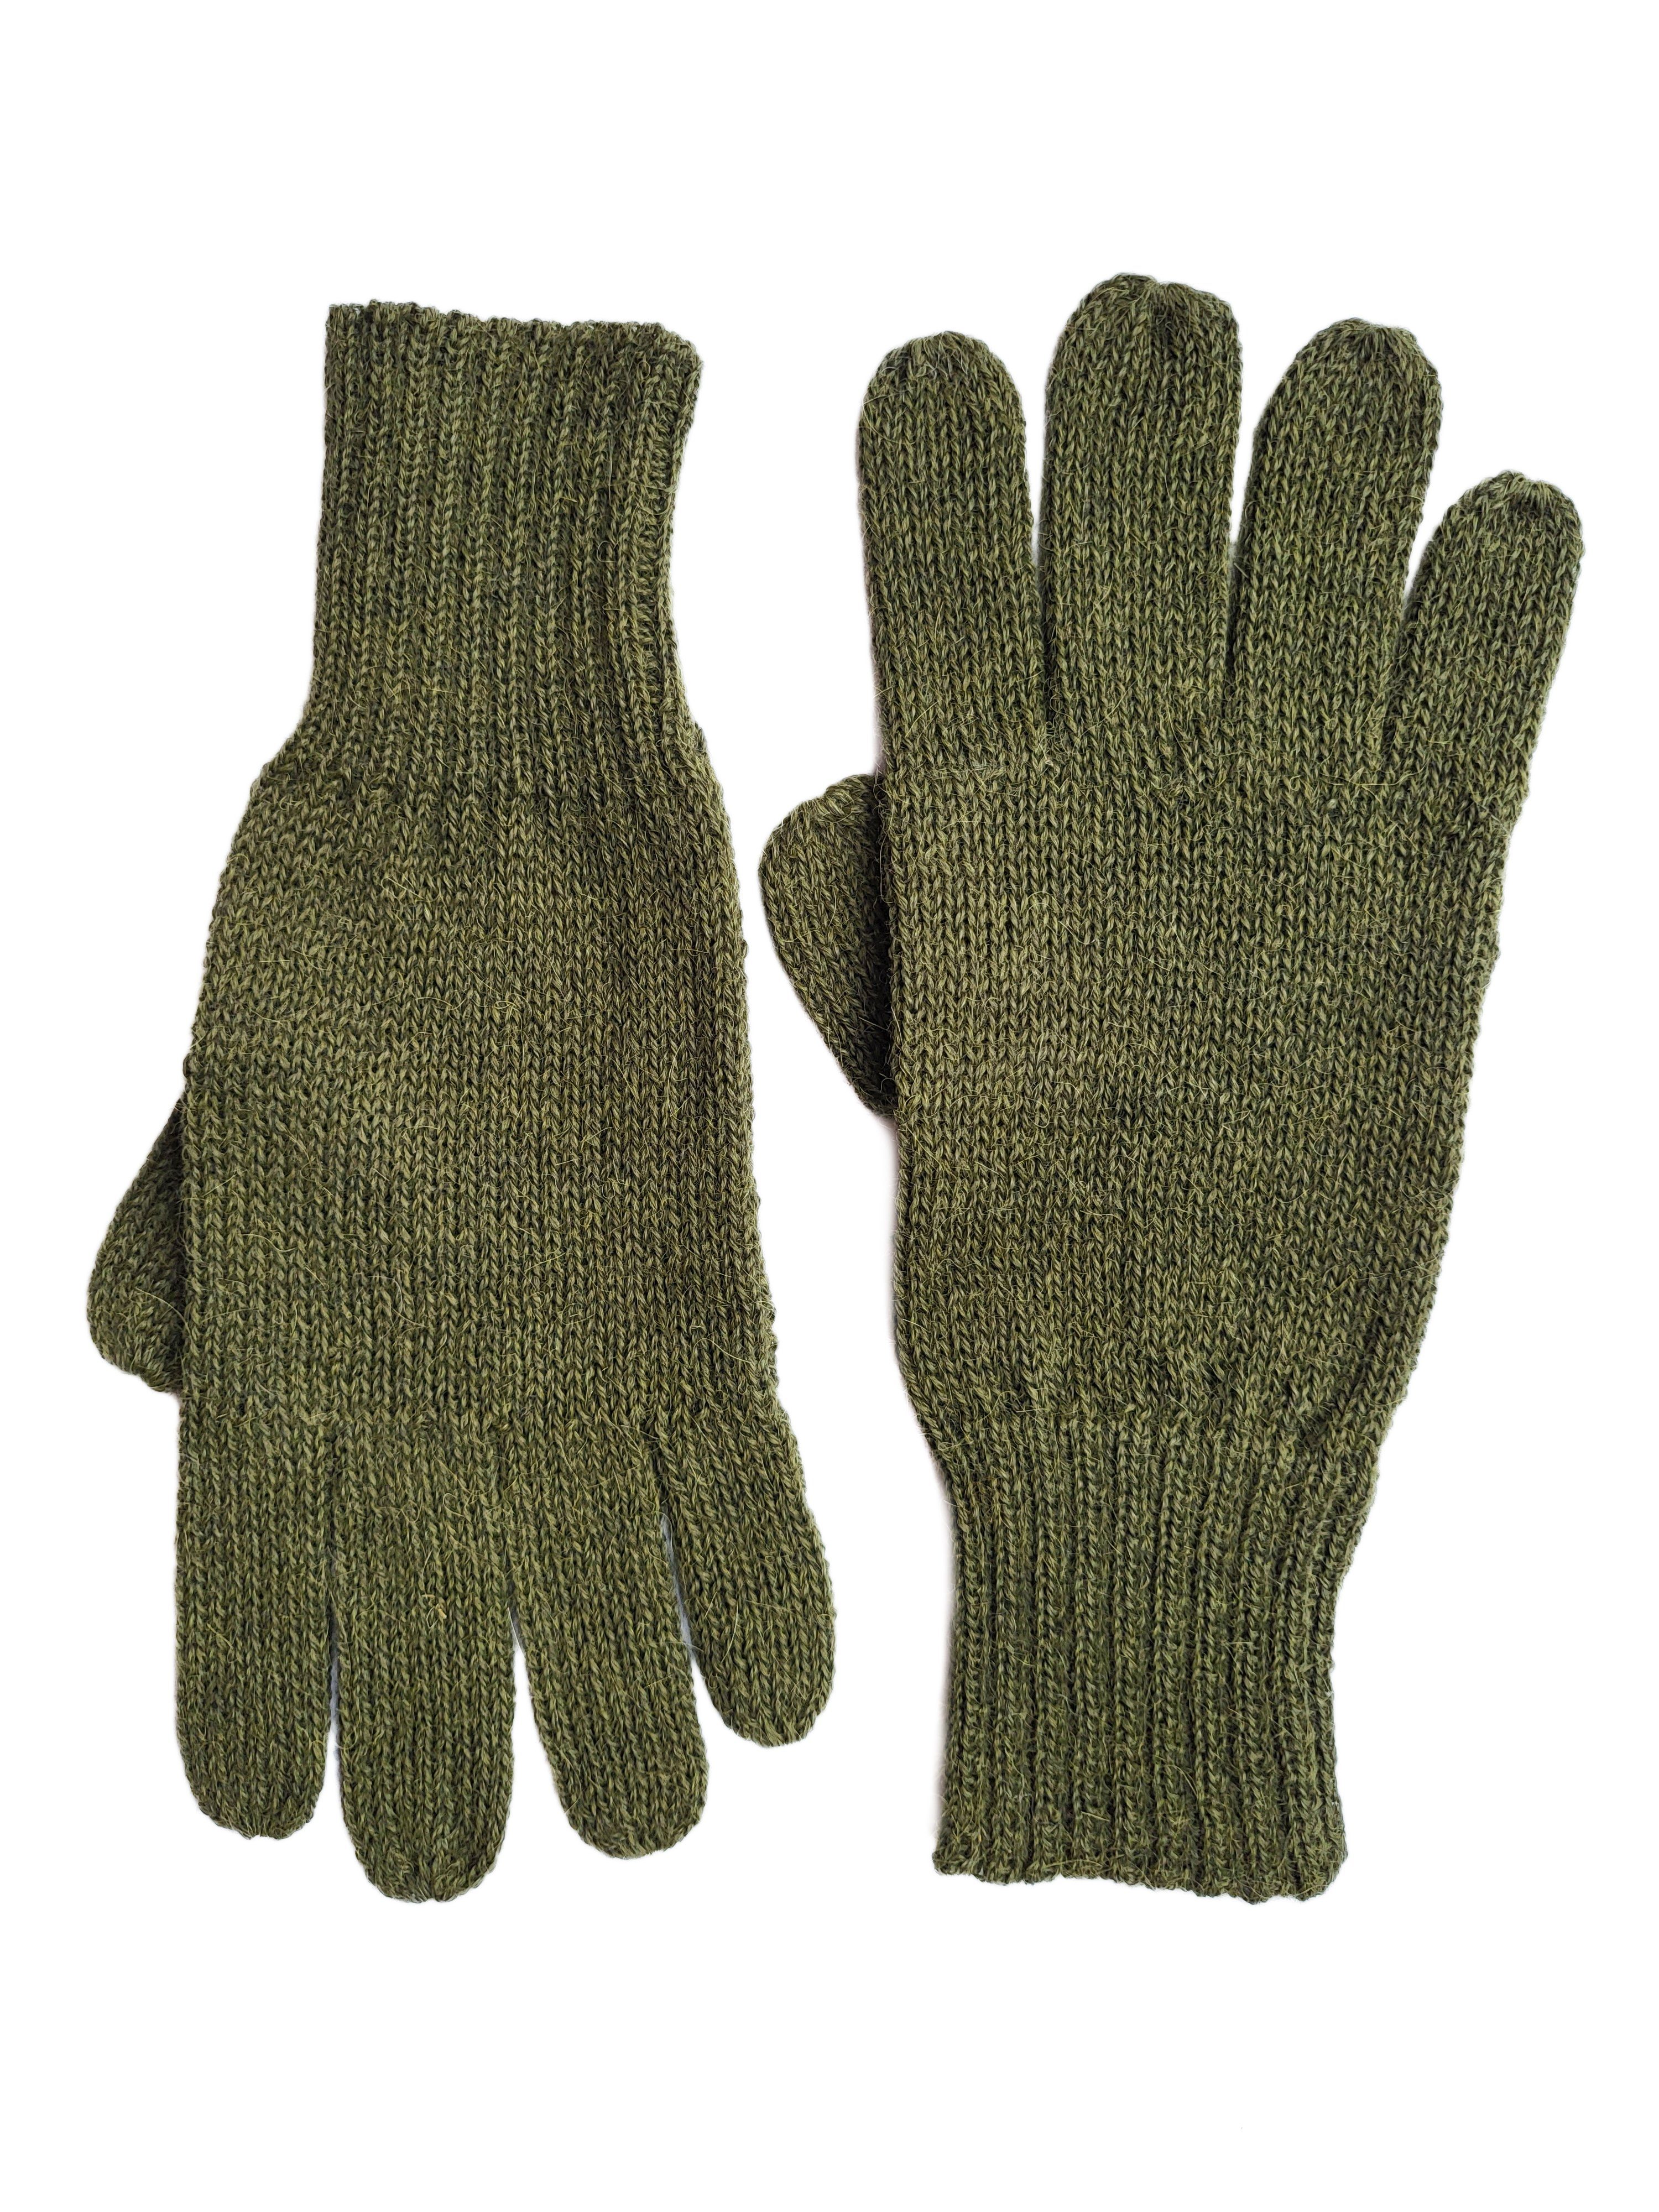 100% grün Alpaka oliv Guantino Posh Strickhandschuhe Fingerhandschuhe Gear Alpakawolle aus